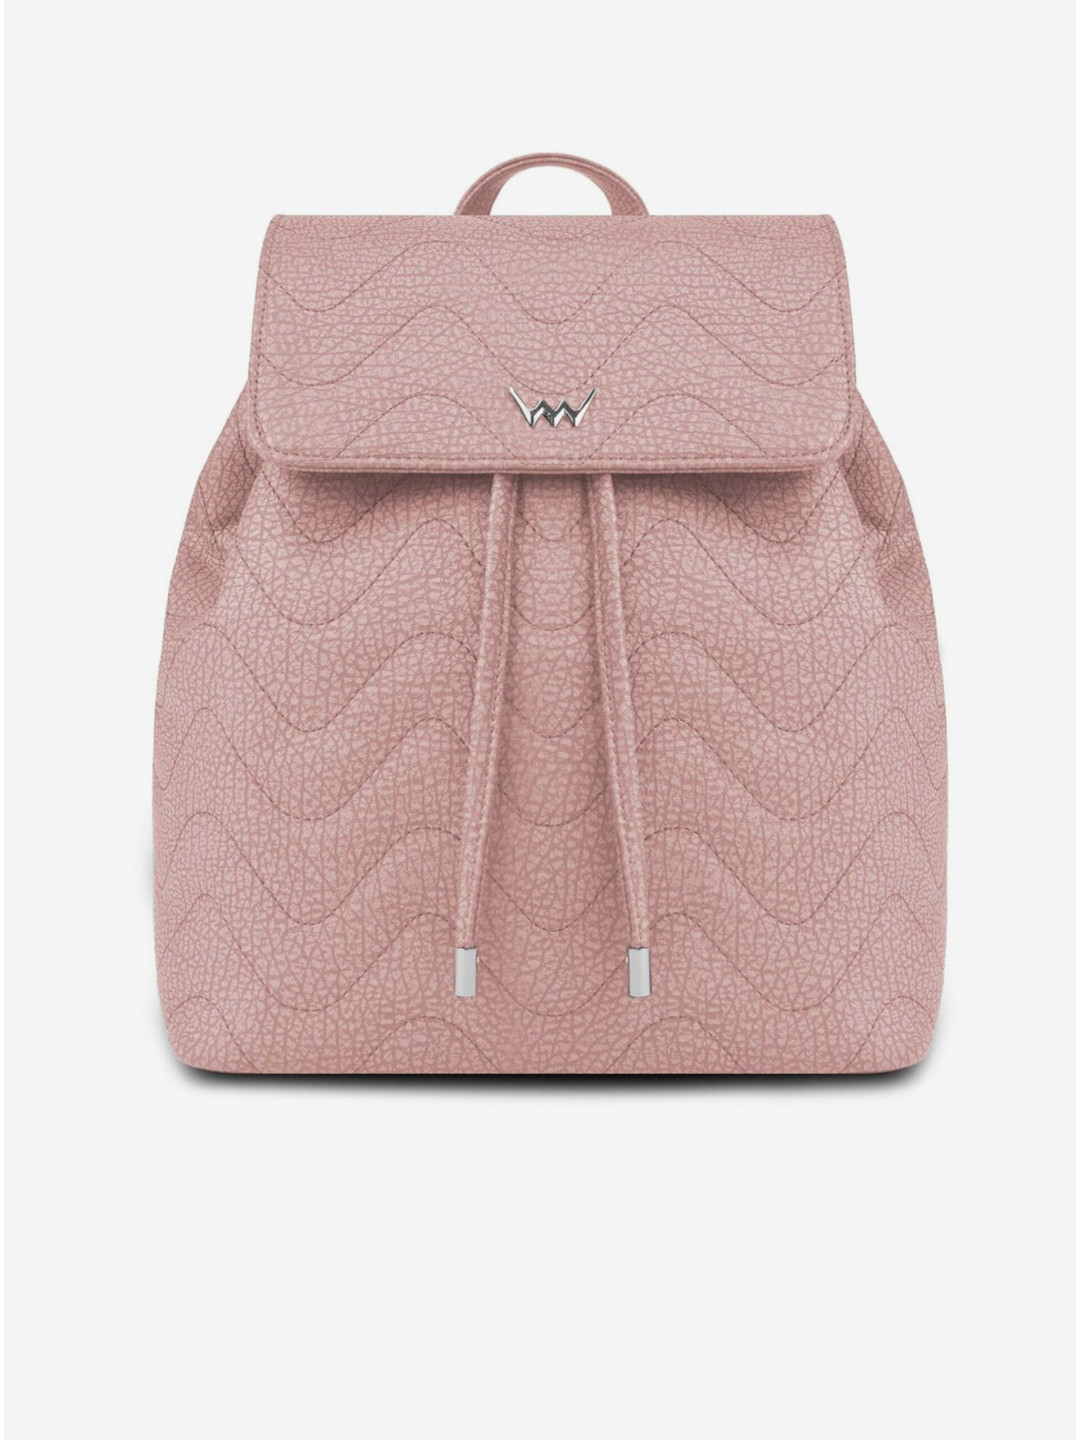 Růžový dámský batoh Amara Pink